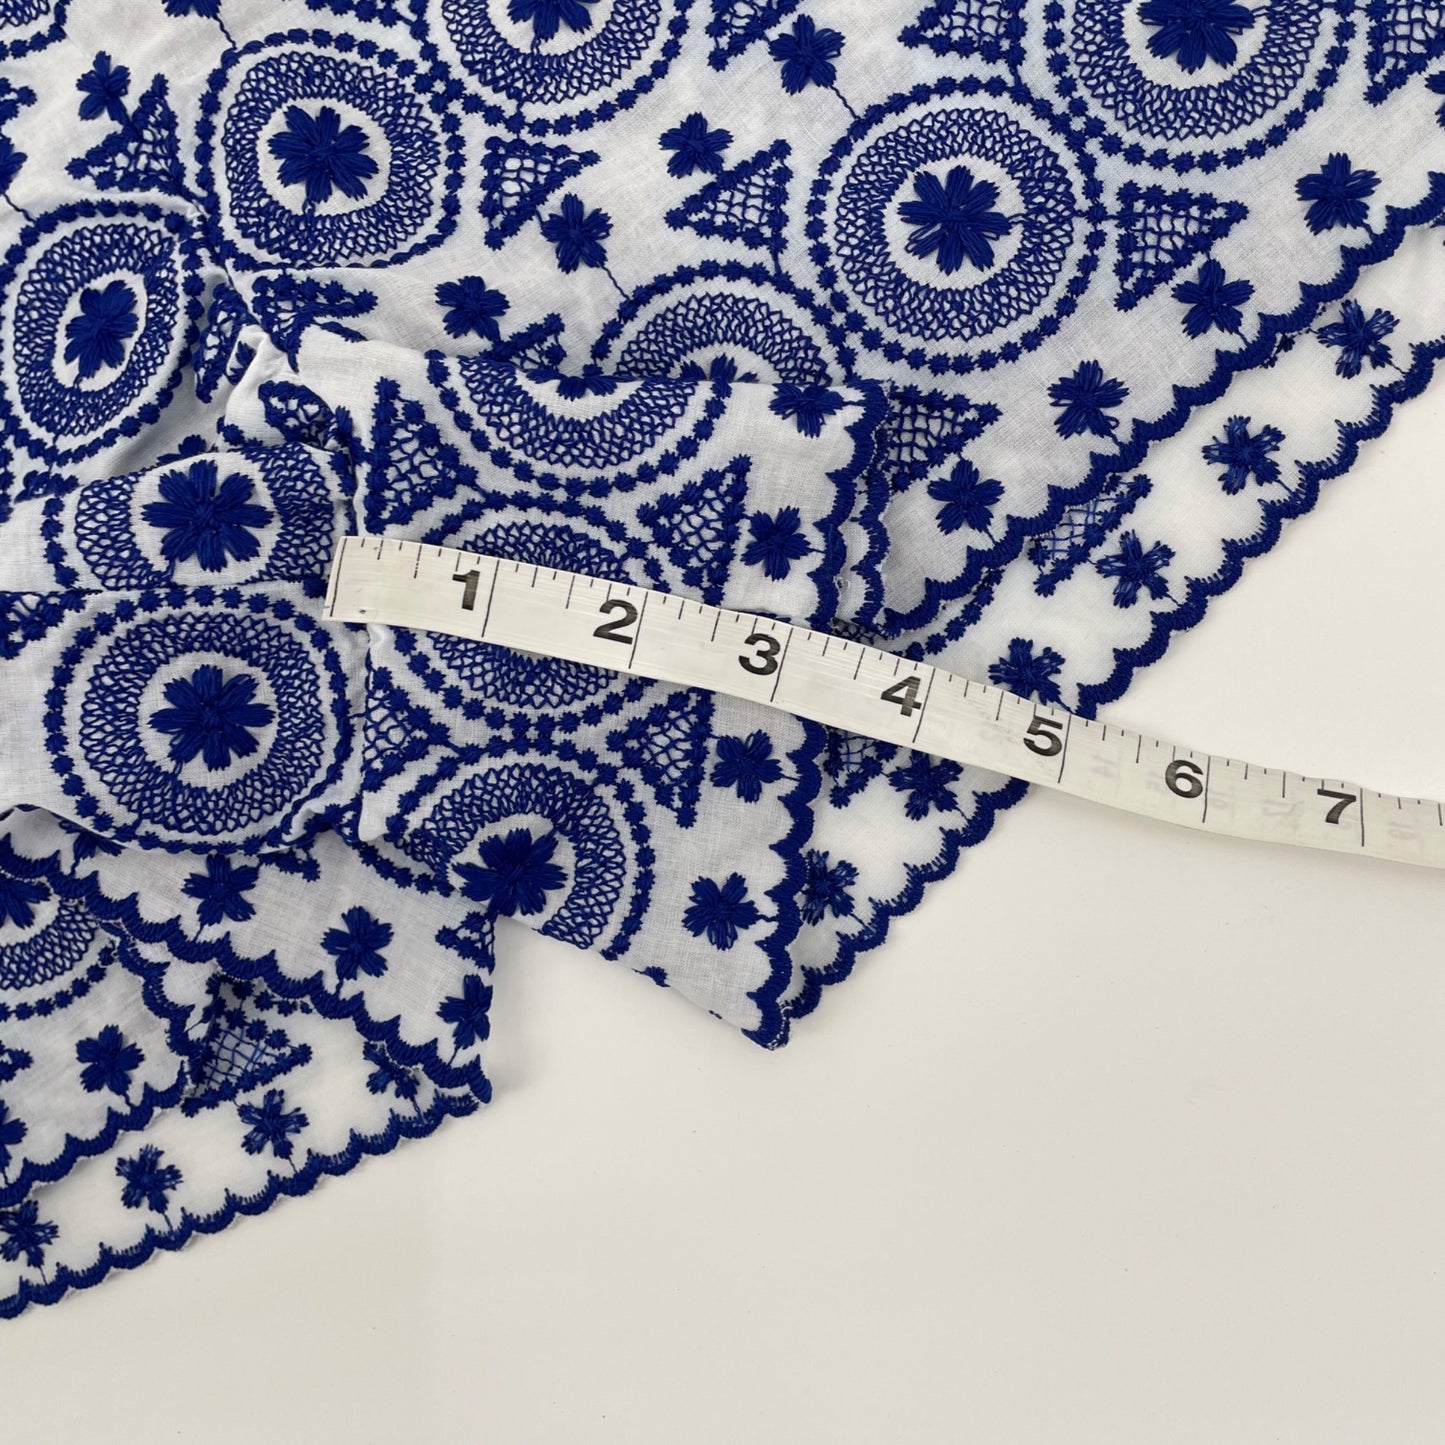 NWT Zara White Blue Embroidered High Rise Scallop Hem Shorts Womens Size Medium